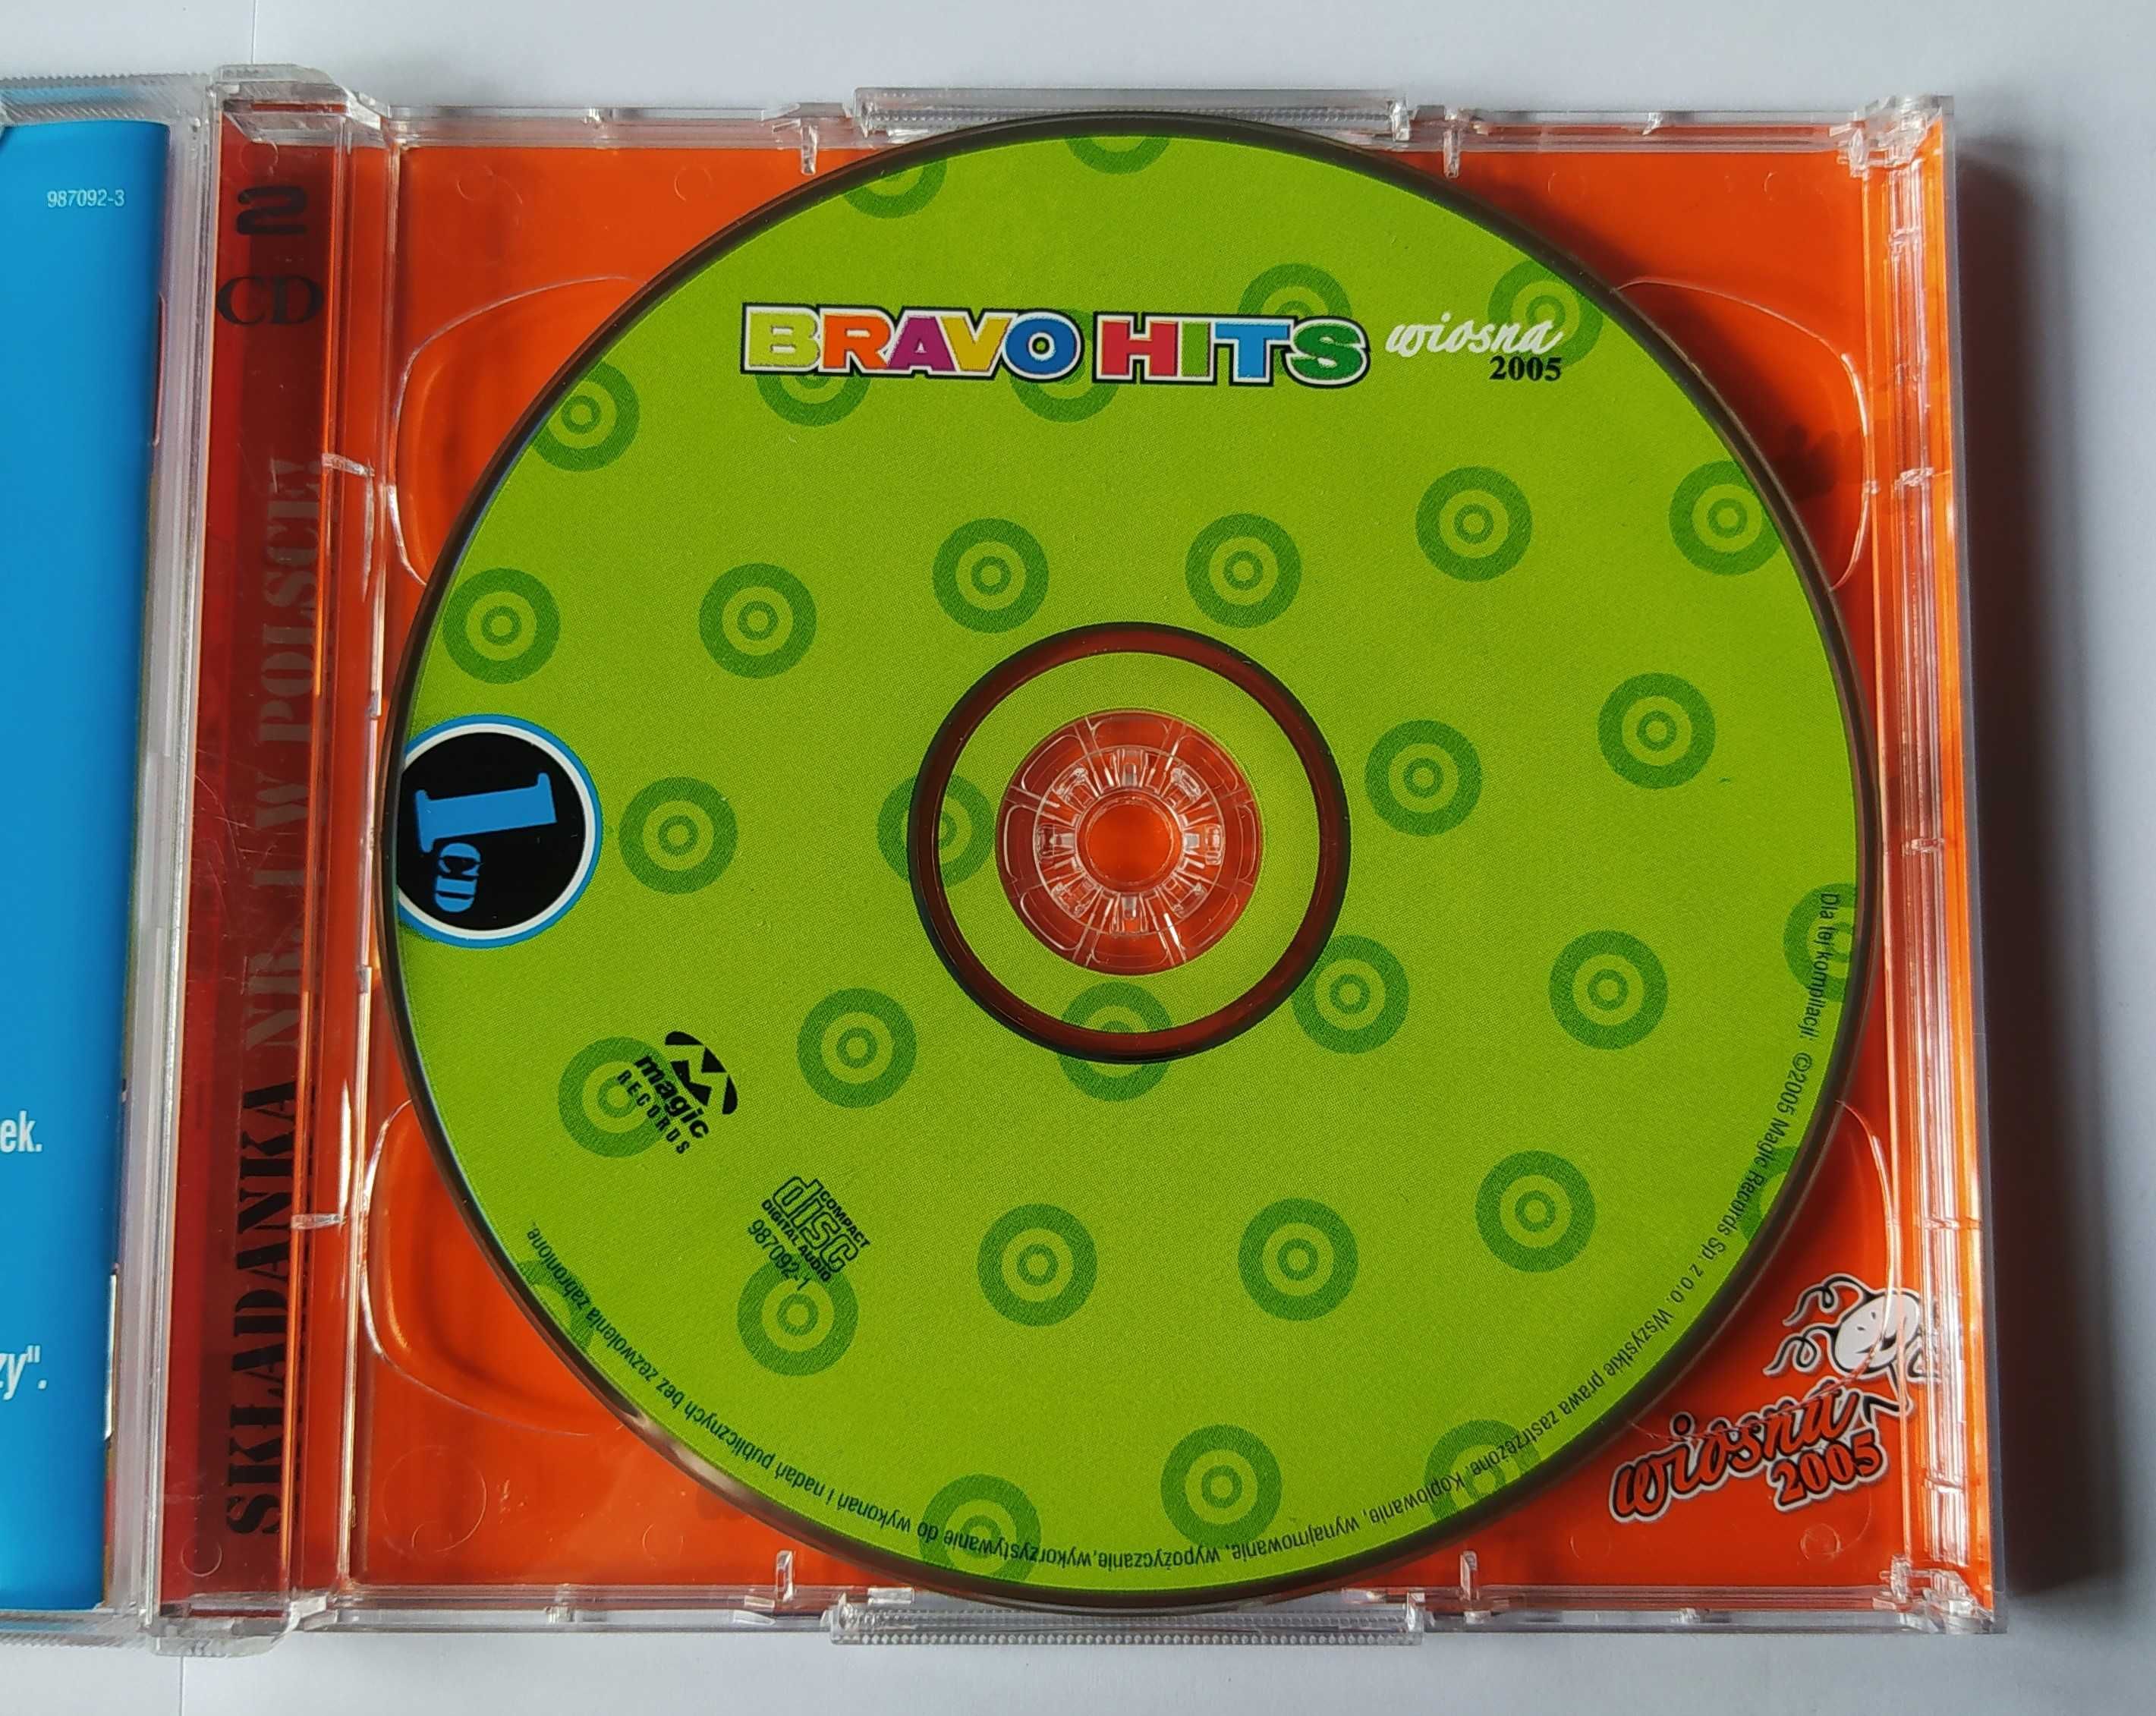 Bravo Hits Wiosna 2005 - 2 CD